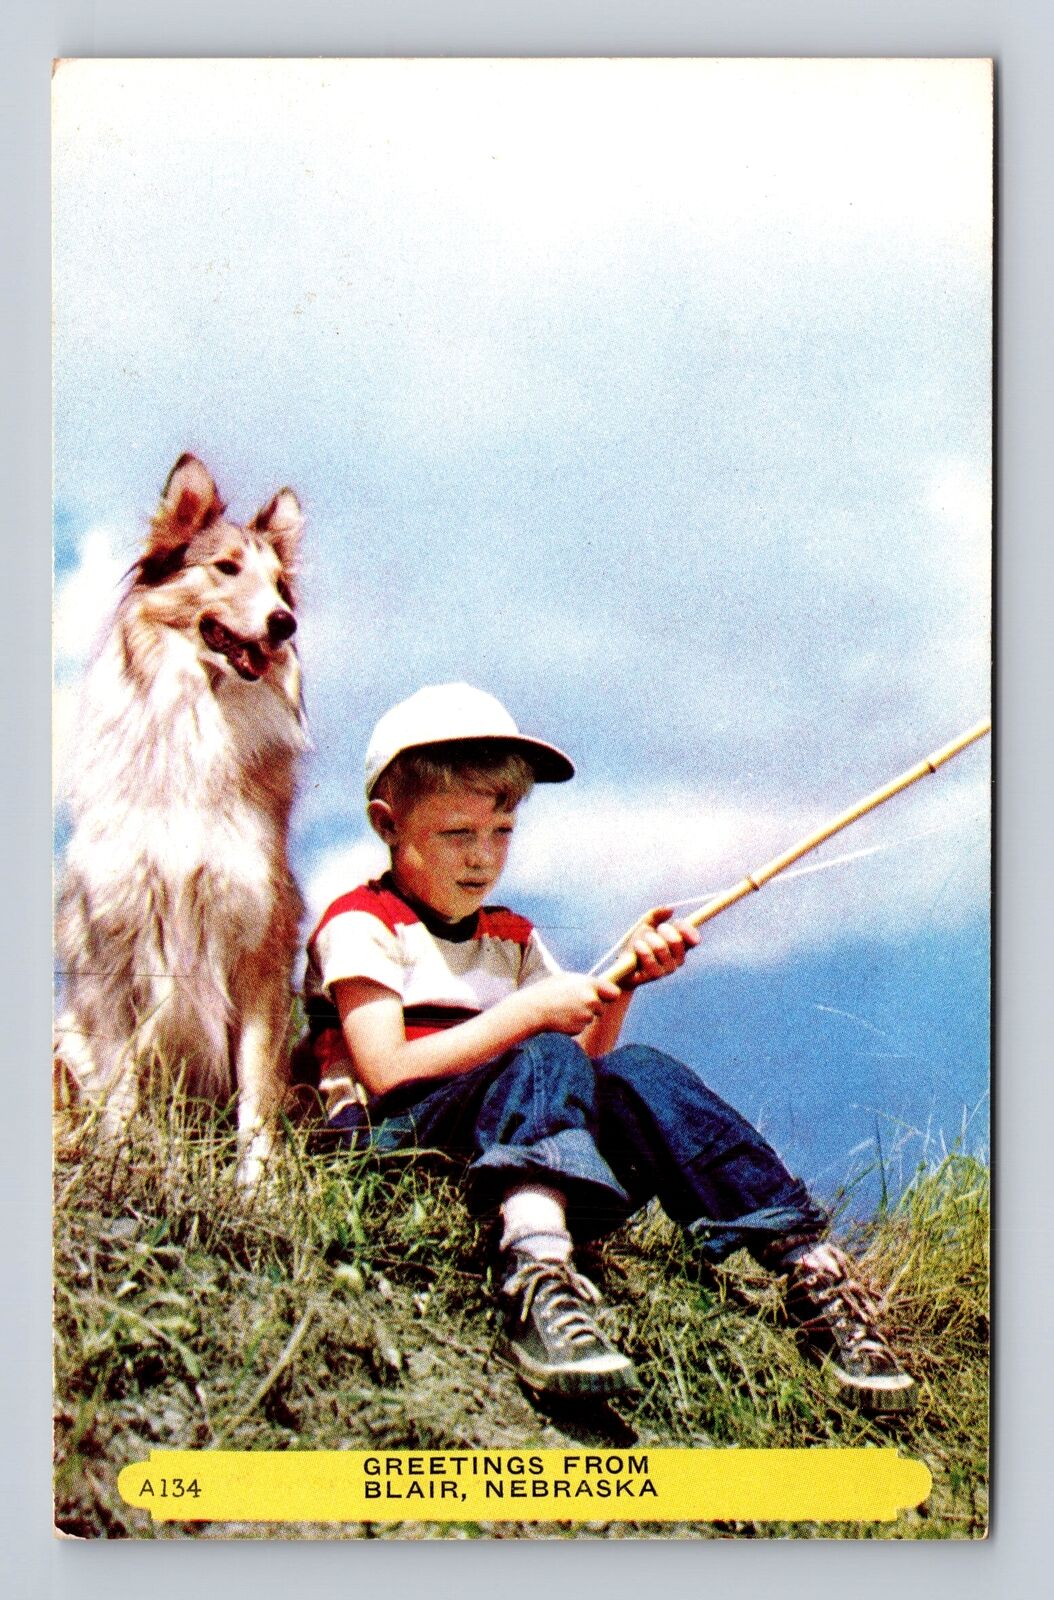 Blair NE-Nebraska, Scenic Greetings, Boy Fishing, Dog, Vintage Souvenir Postcard